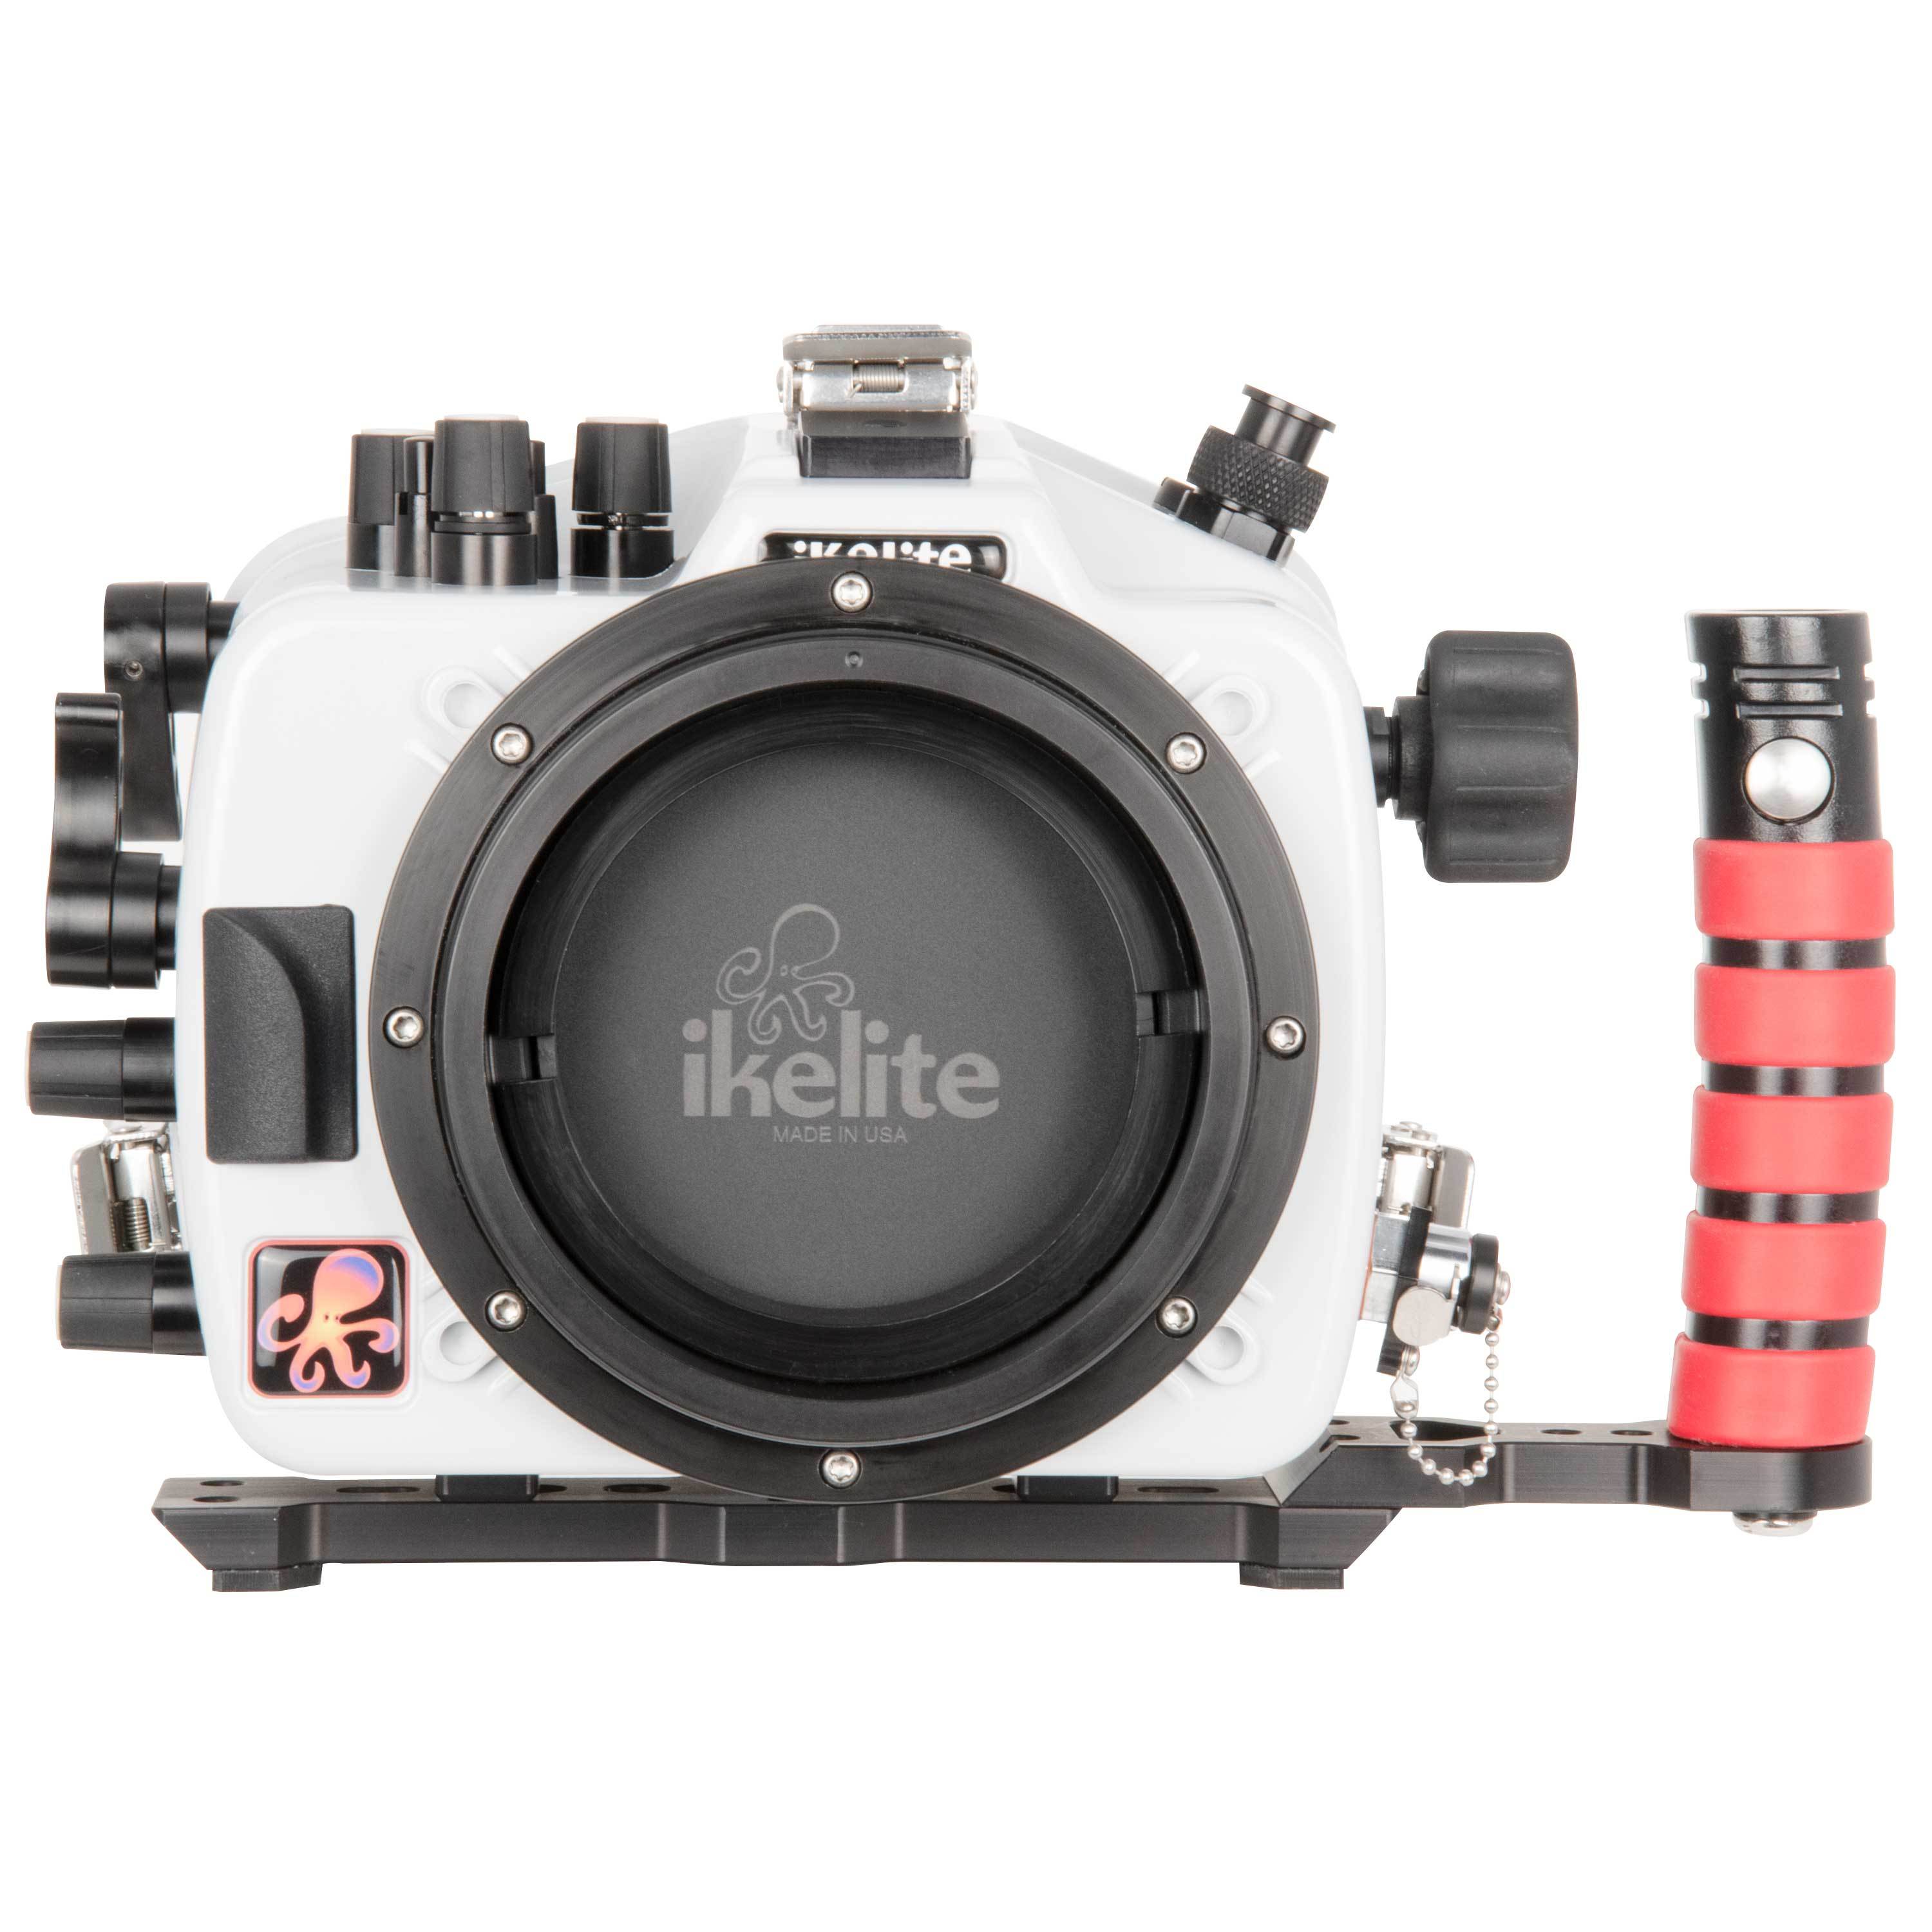 Ikelite 200DL Underwater Housing for Sony Alpha a7R IV Mirrorless Digital Cameras